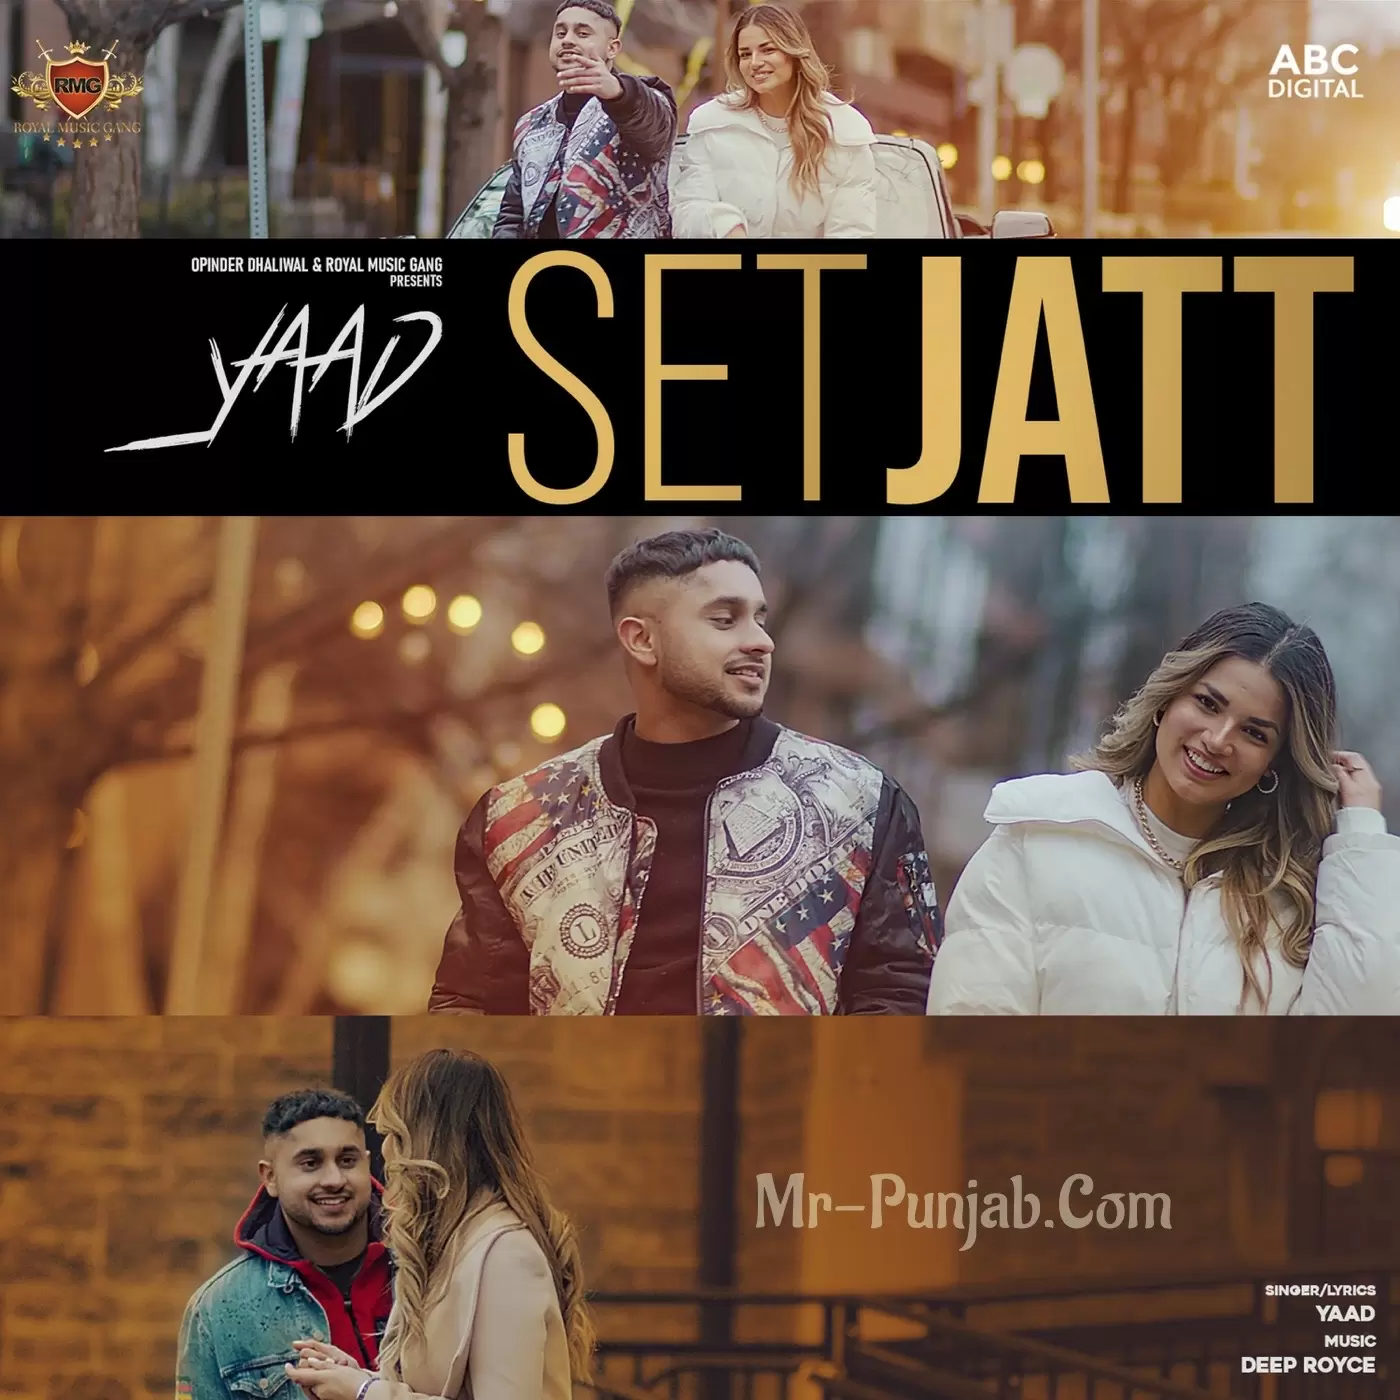 Set Jatt Yaad Mp3 Download Song - Mr-Punjab